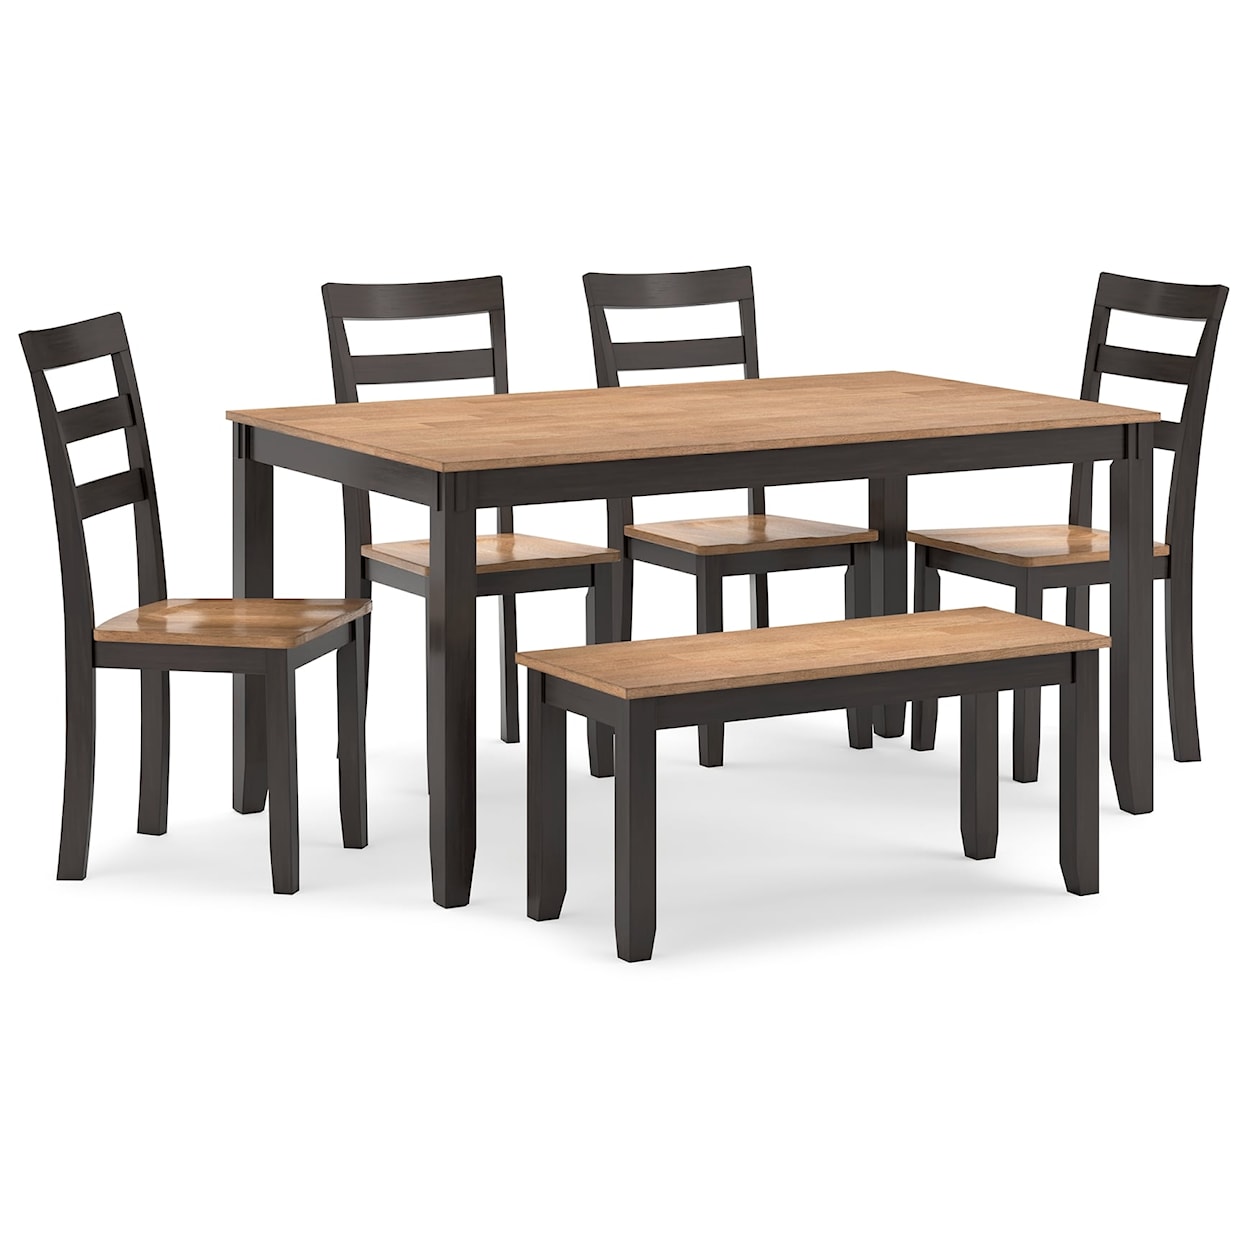 Ashley Furniture Signature Design Gesthaven Dining Room Table Set (Set of 6)